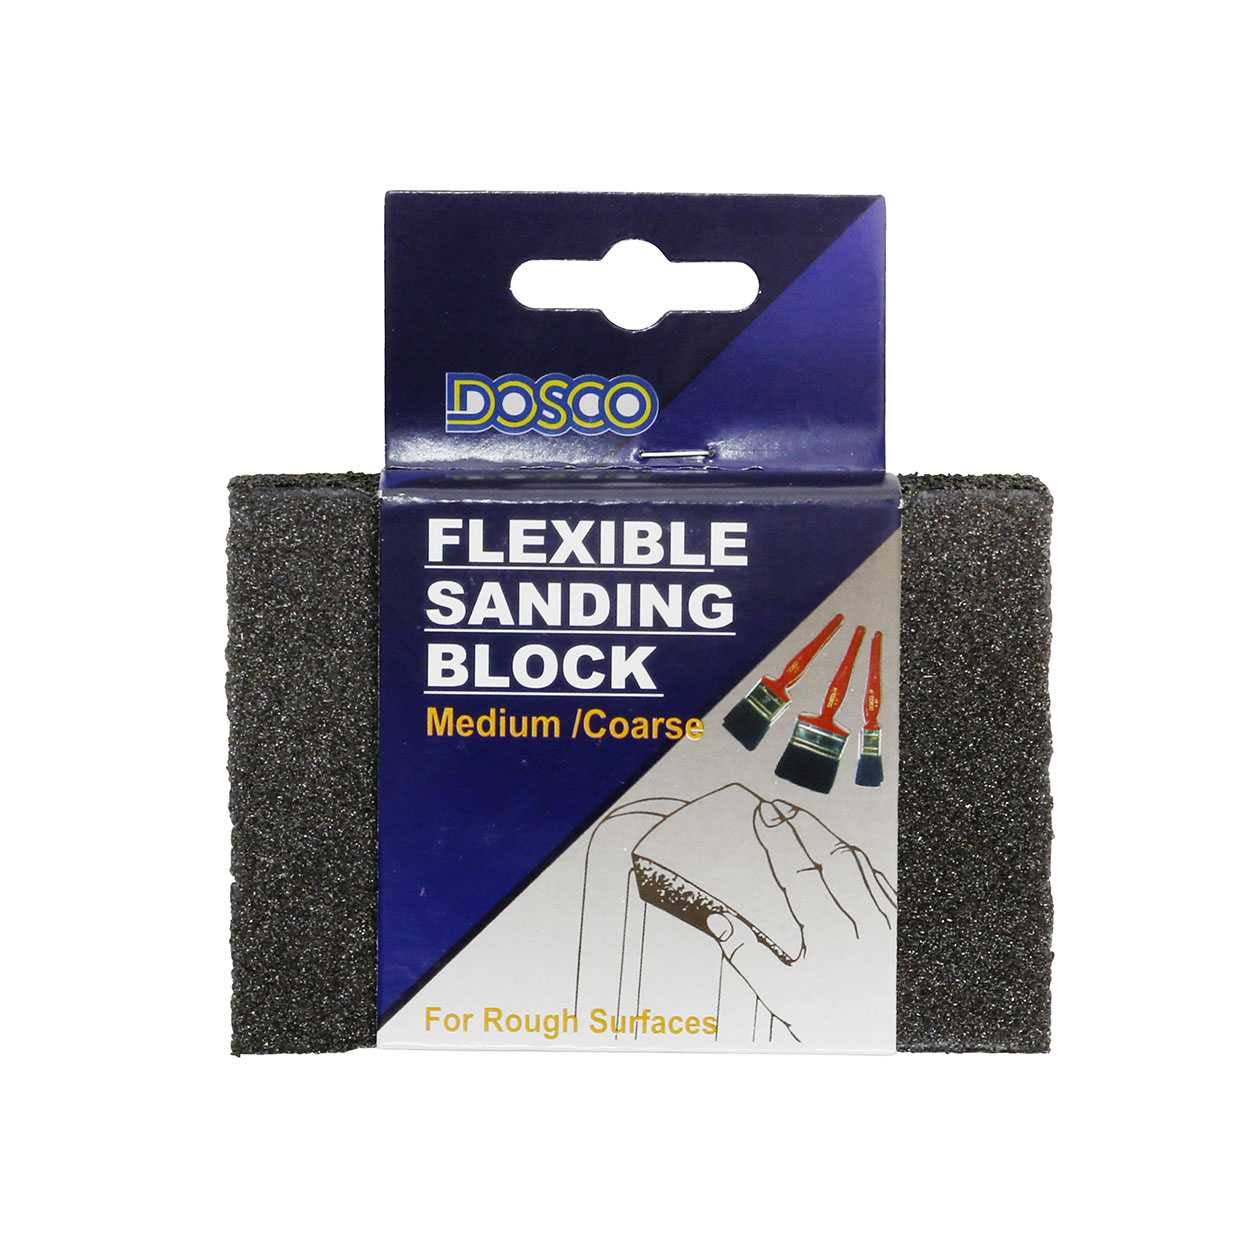 Dosco Flexible Sanding Block - Medium